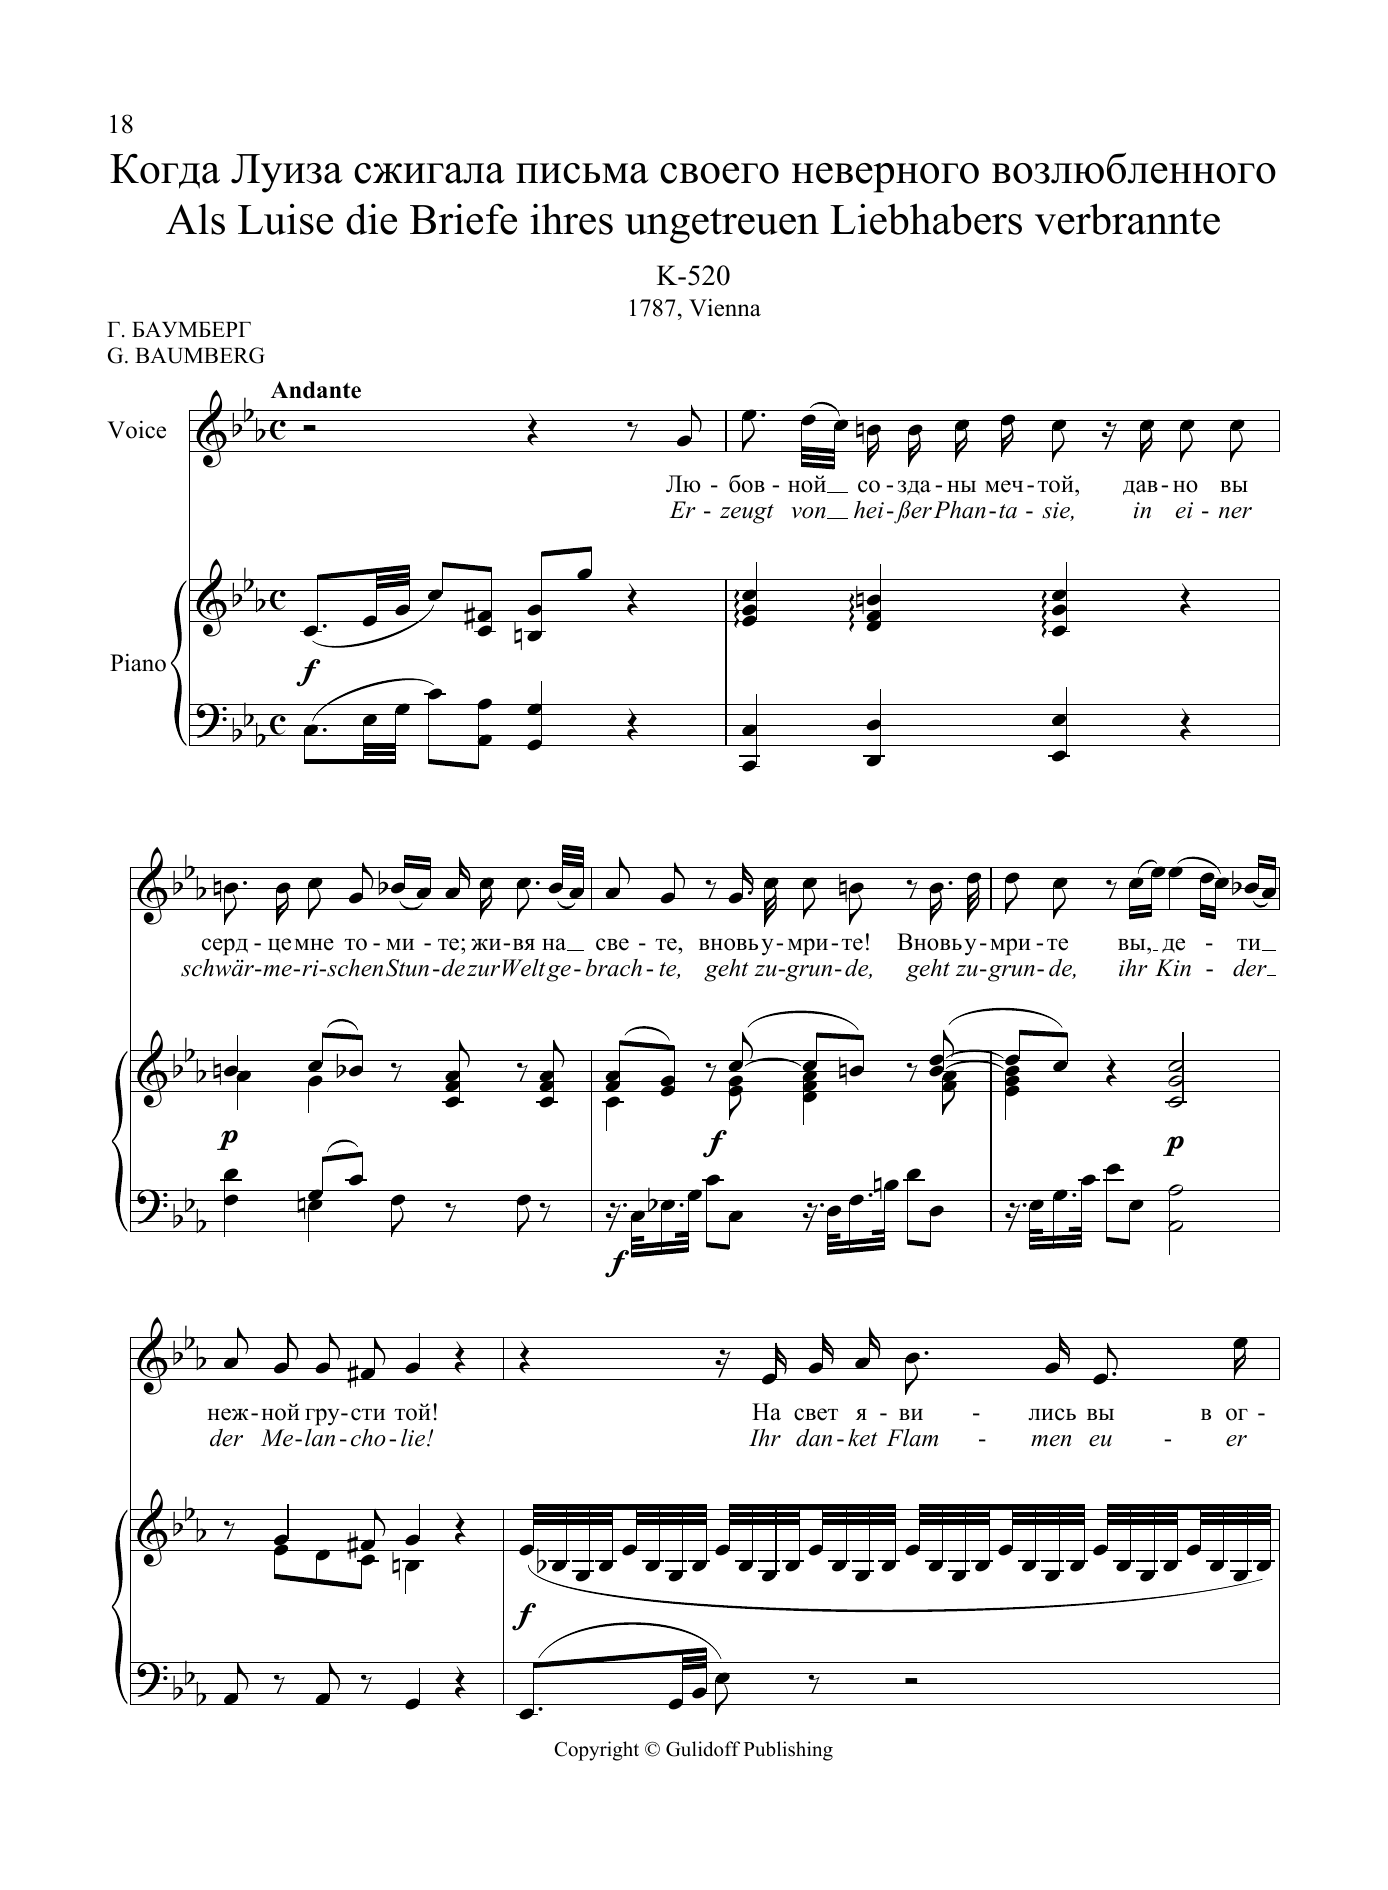 Wolfgang Amadeus Mozart 36 Songs Vol. 2: Als Luise die Briefe ihres ungetreuen Liebhabers verbrannte Sheet Music Notes & Chords for Piano & Vocal - Download or Print PDF